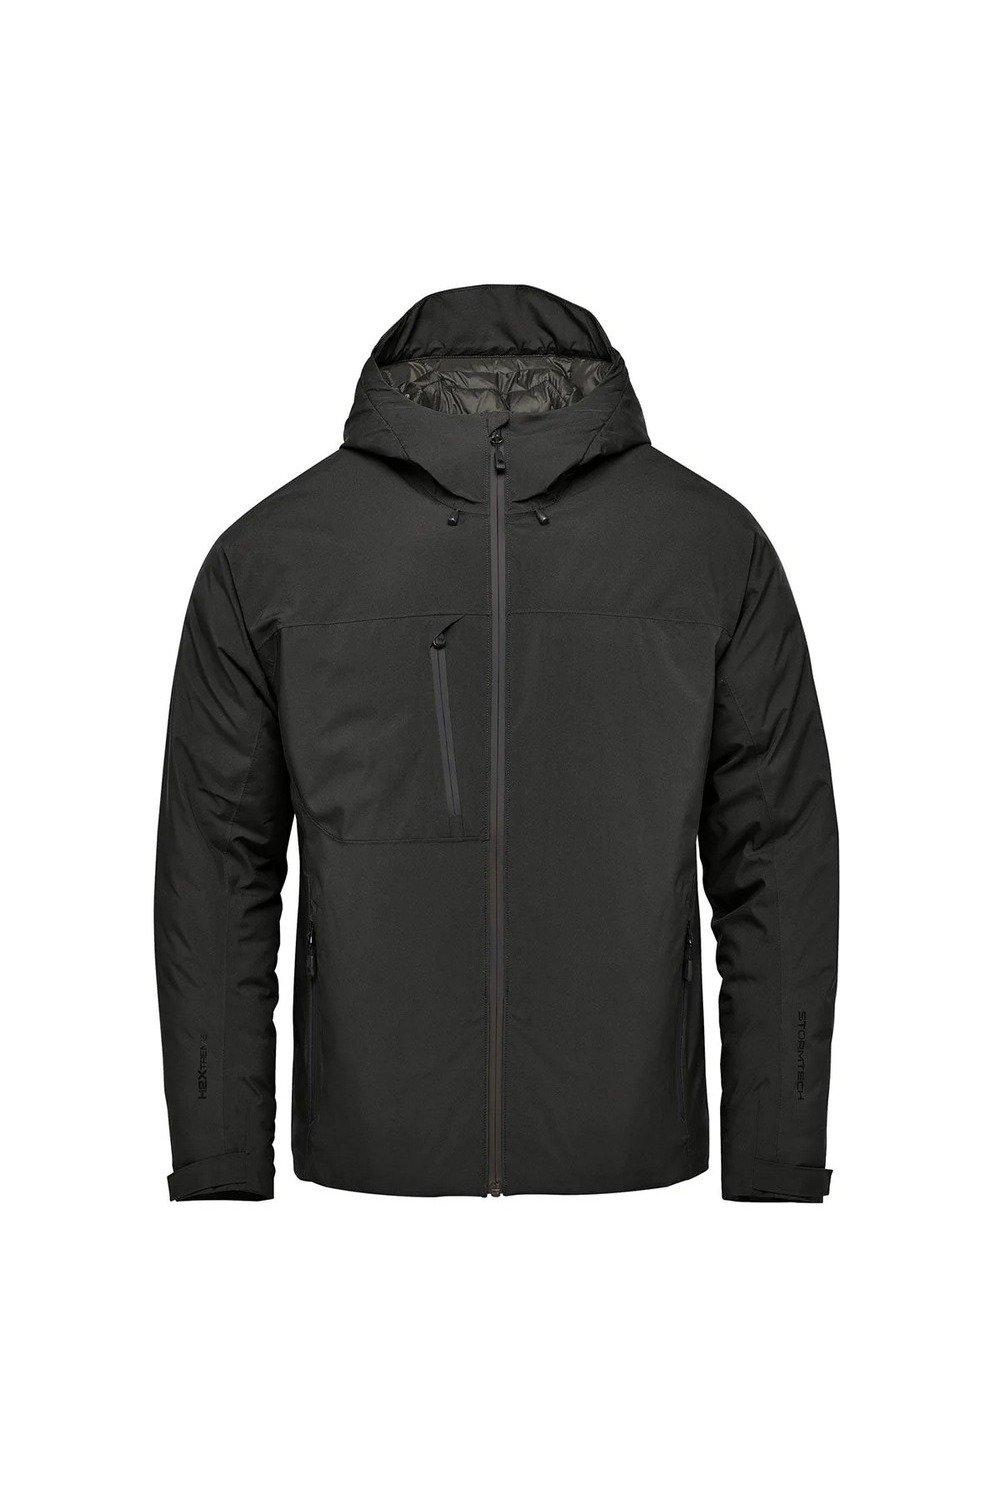 Куртка Nostromo Thermal Soft Shell Stormtech, черный куртка nostromo thermal soft shell stormtech серый